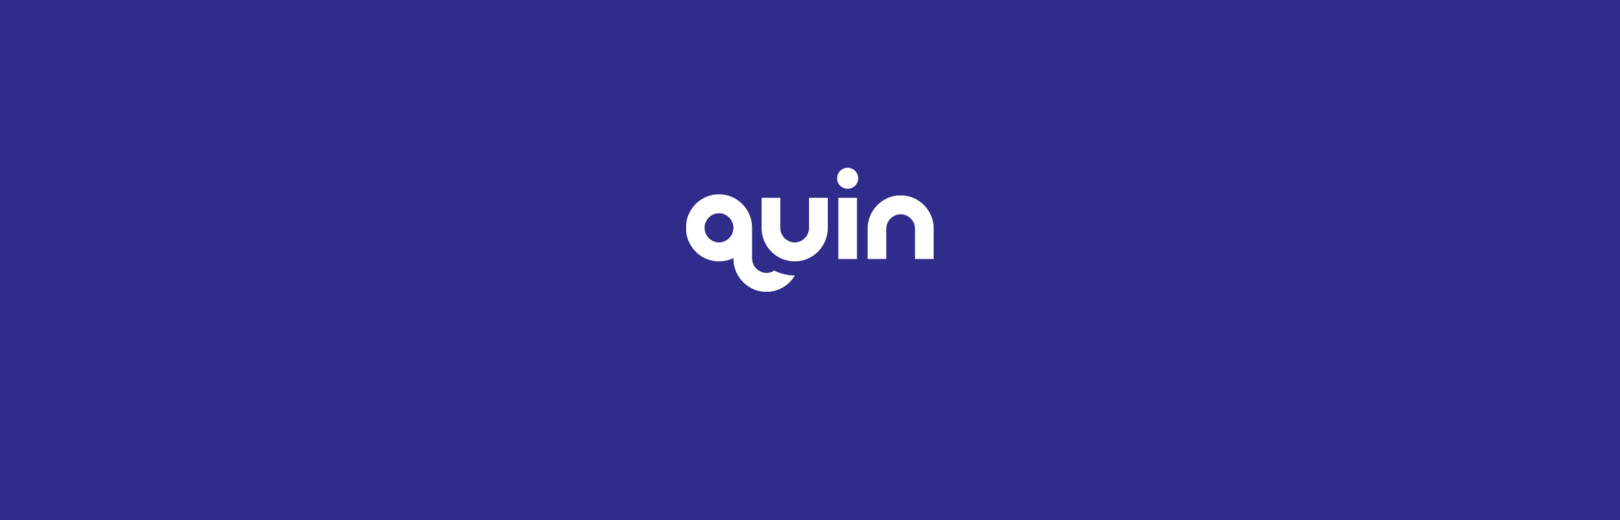 Quin Logo Banner 2